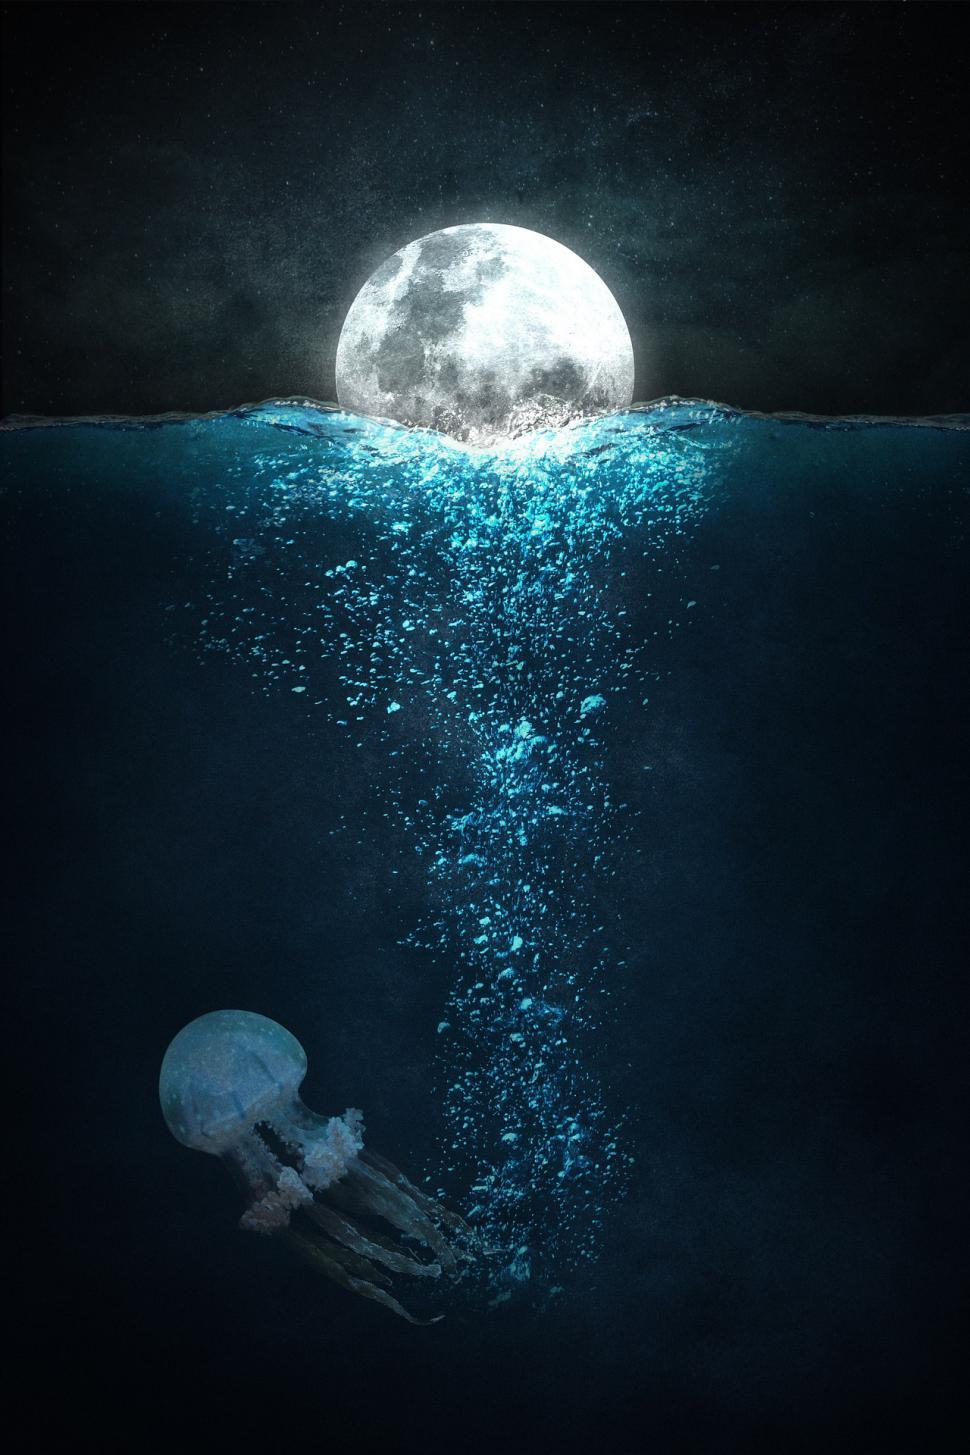 Free Image of Jellyfish Floating in Ocean Under Full Moon 